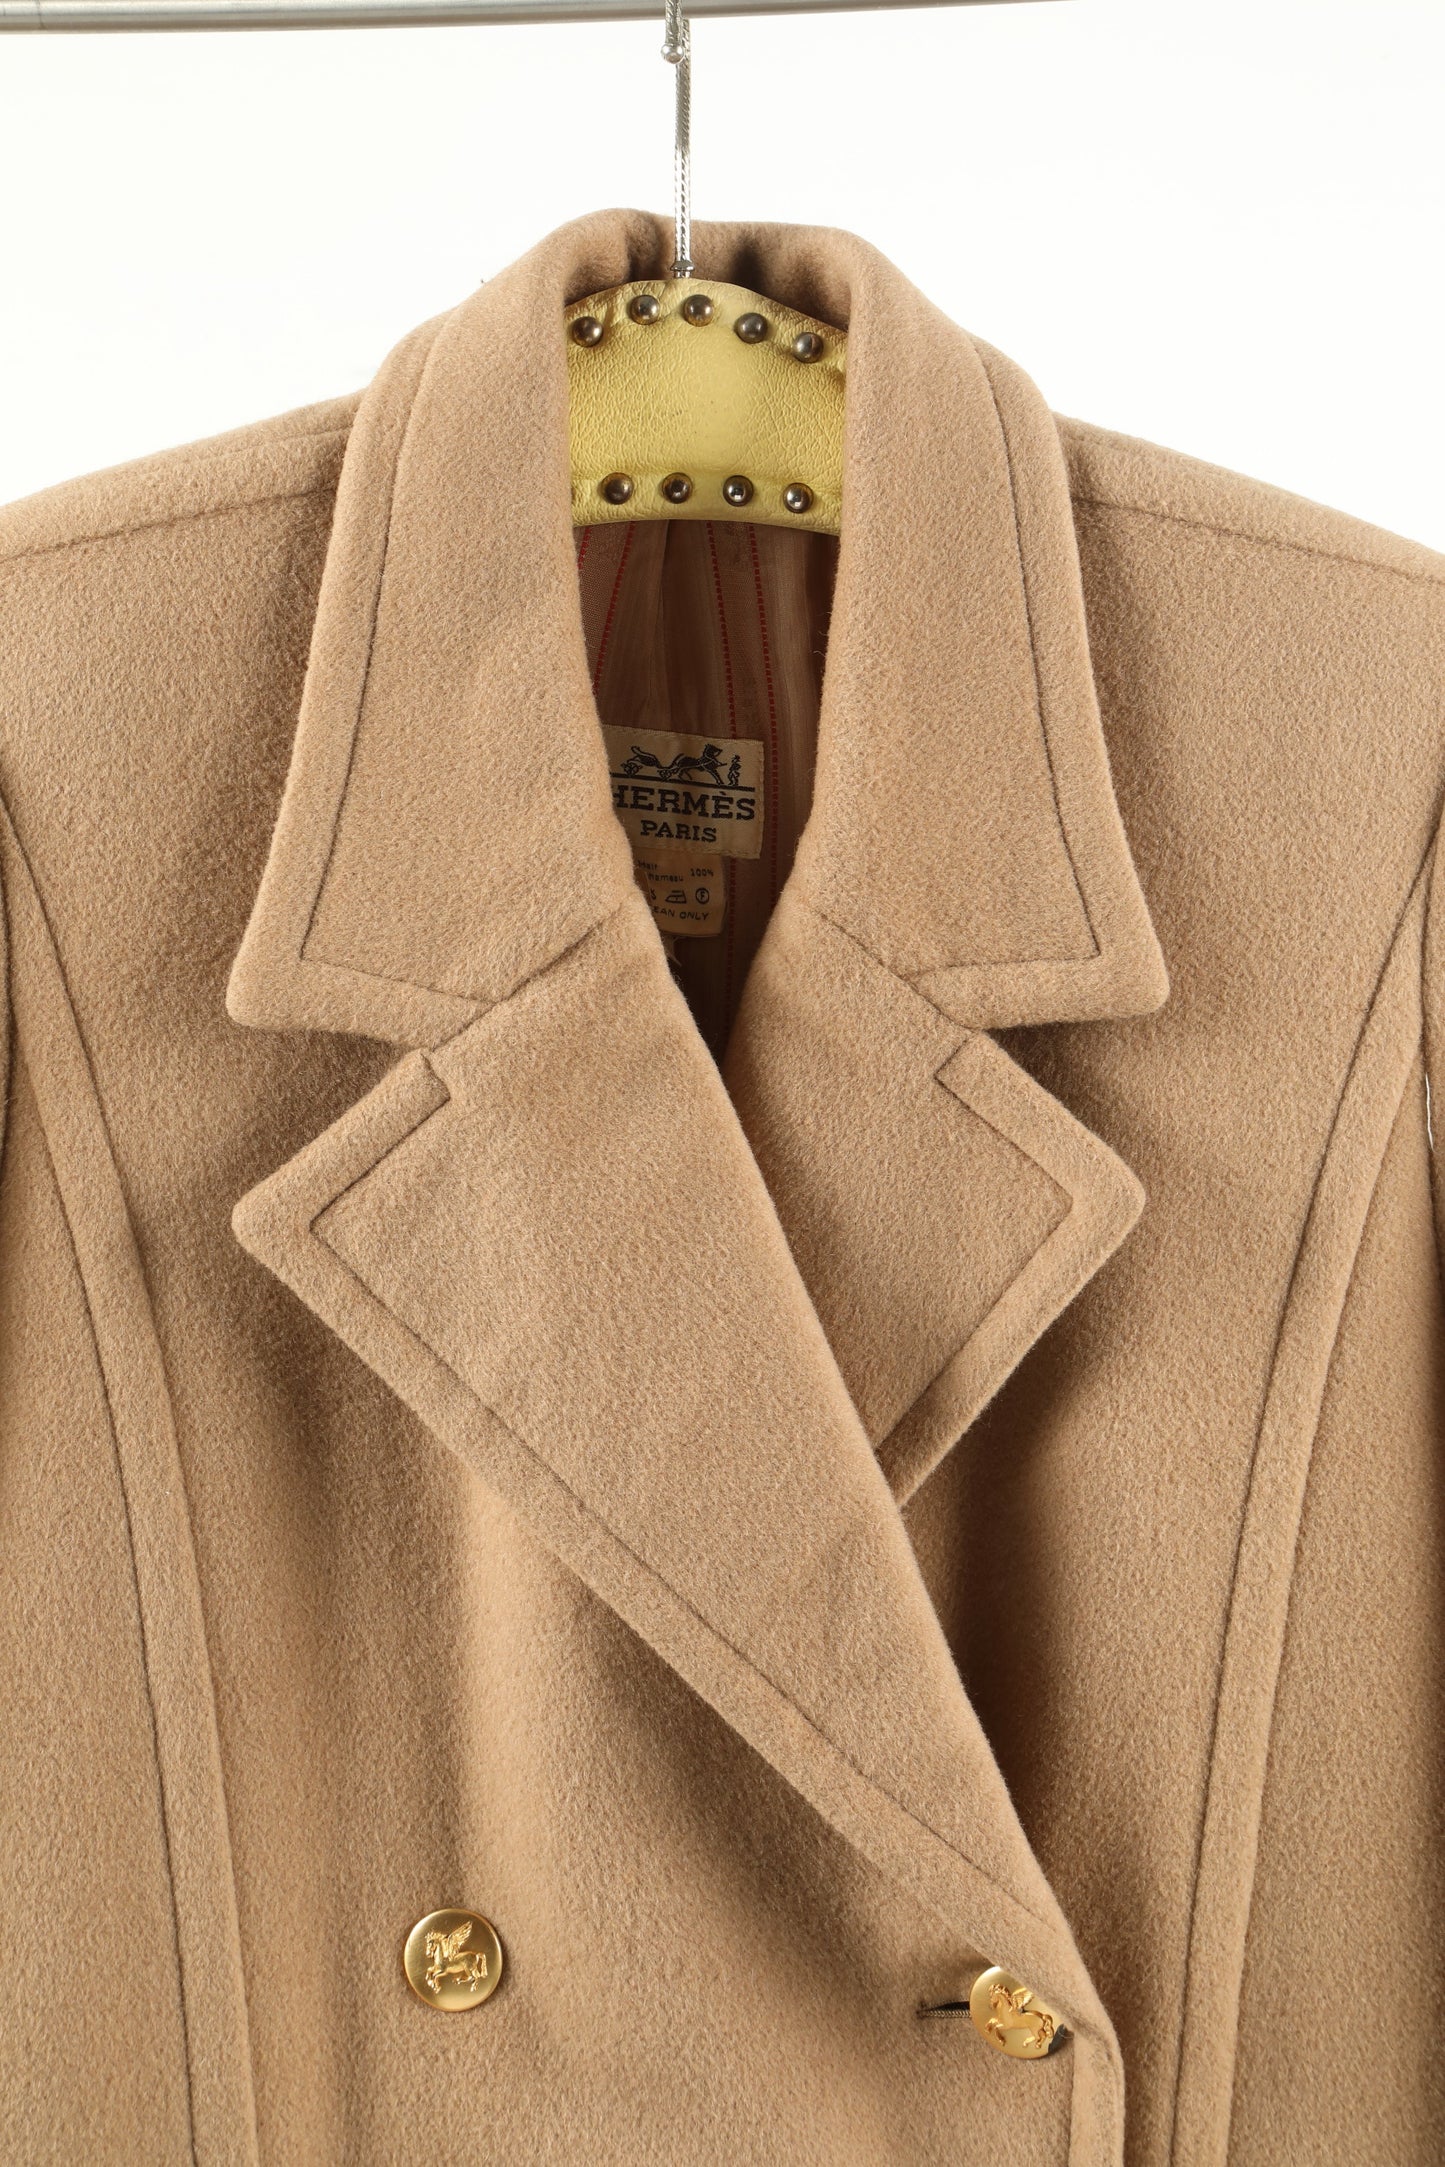 Camel Hermes coat